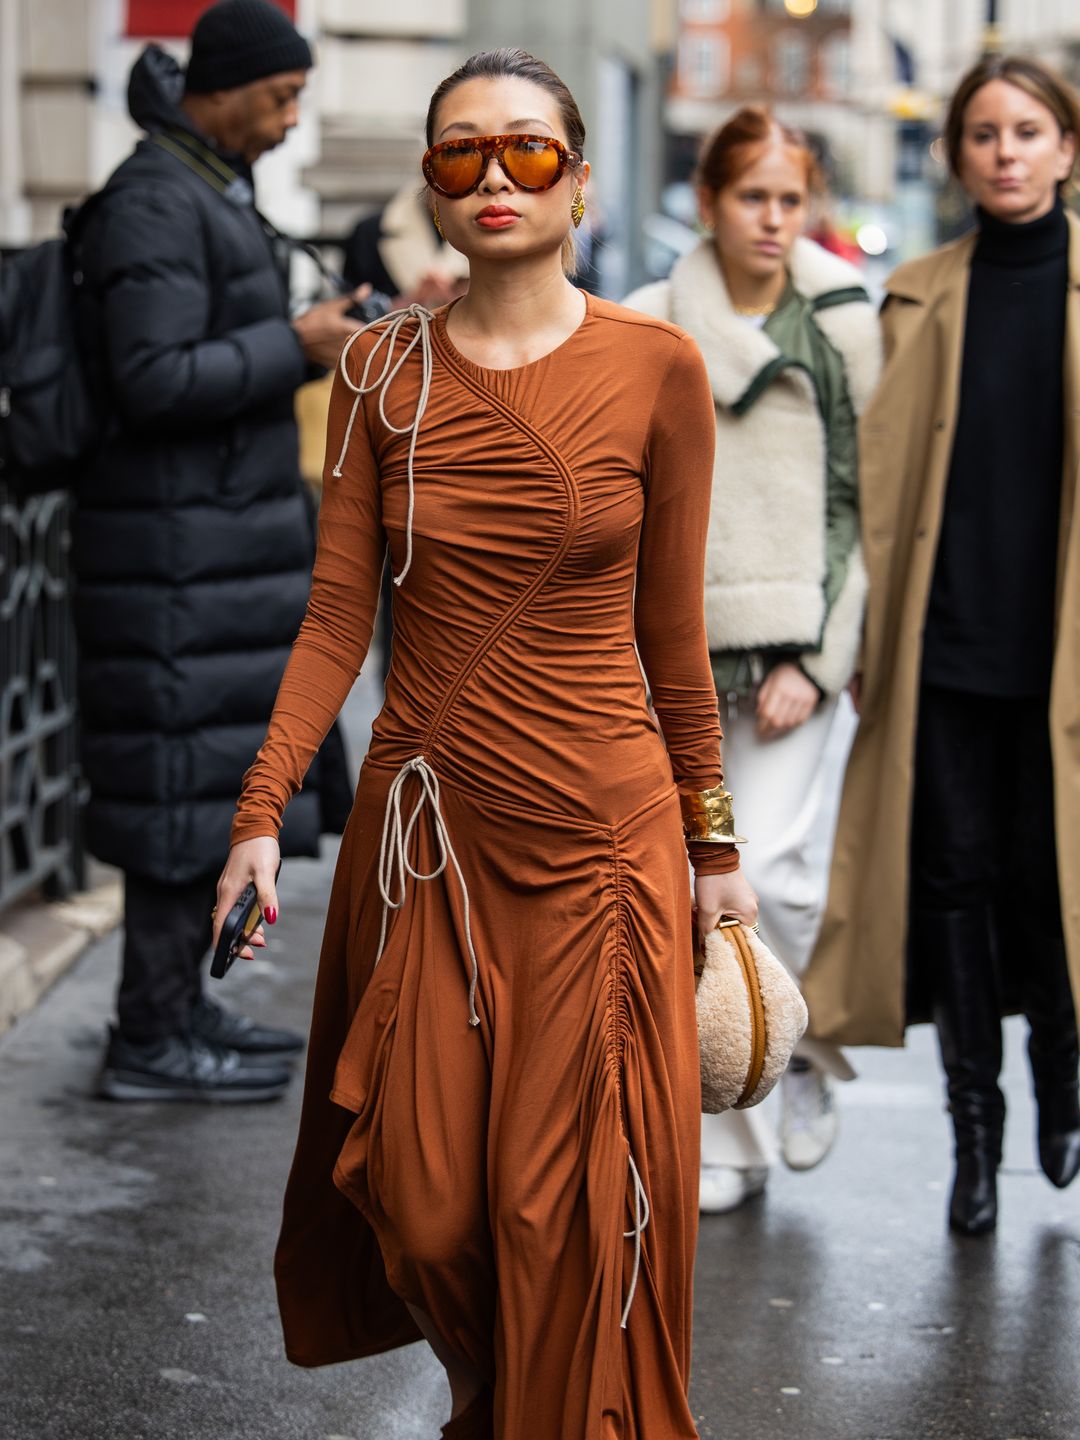  Rosana Lai wears brown dress, teddy bag outside Emilia Wickstead during London Fashion Week 